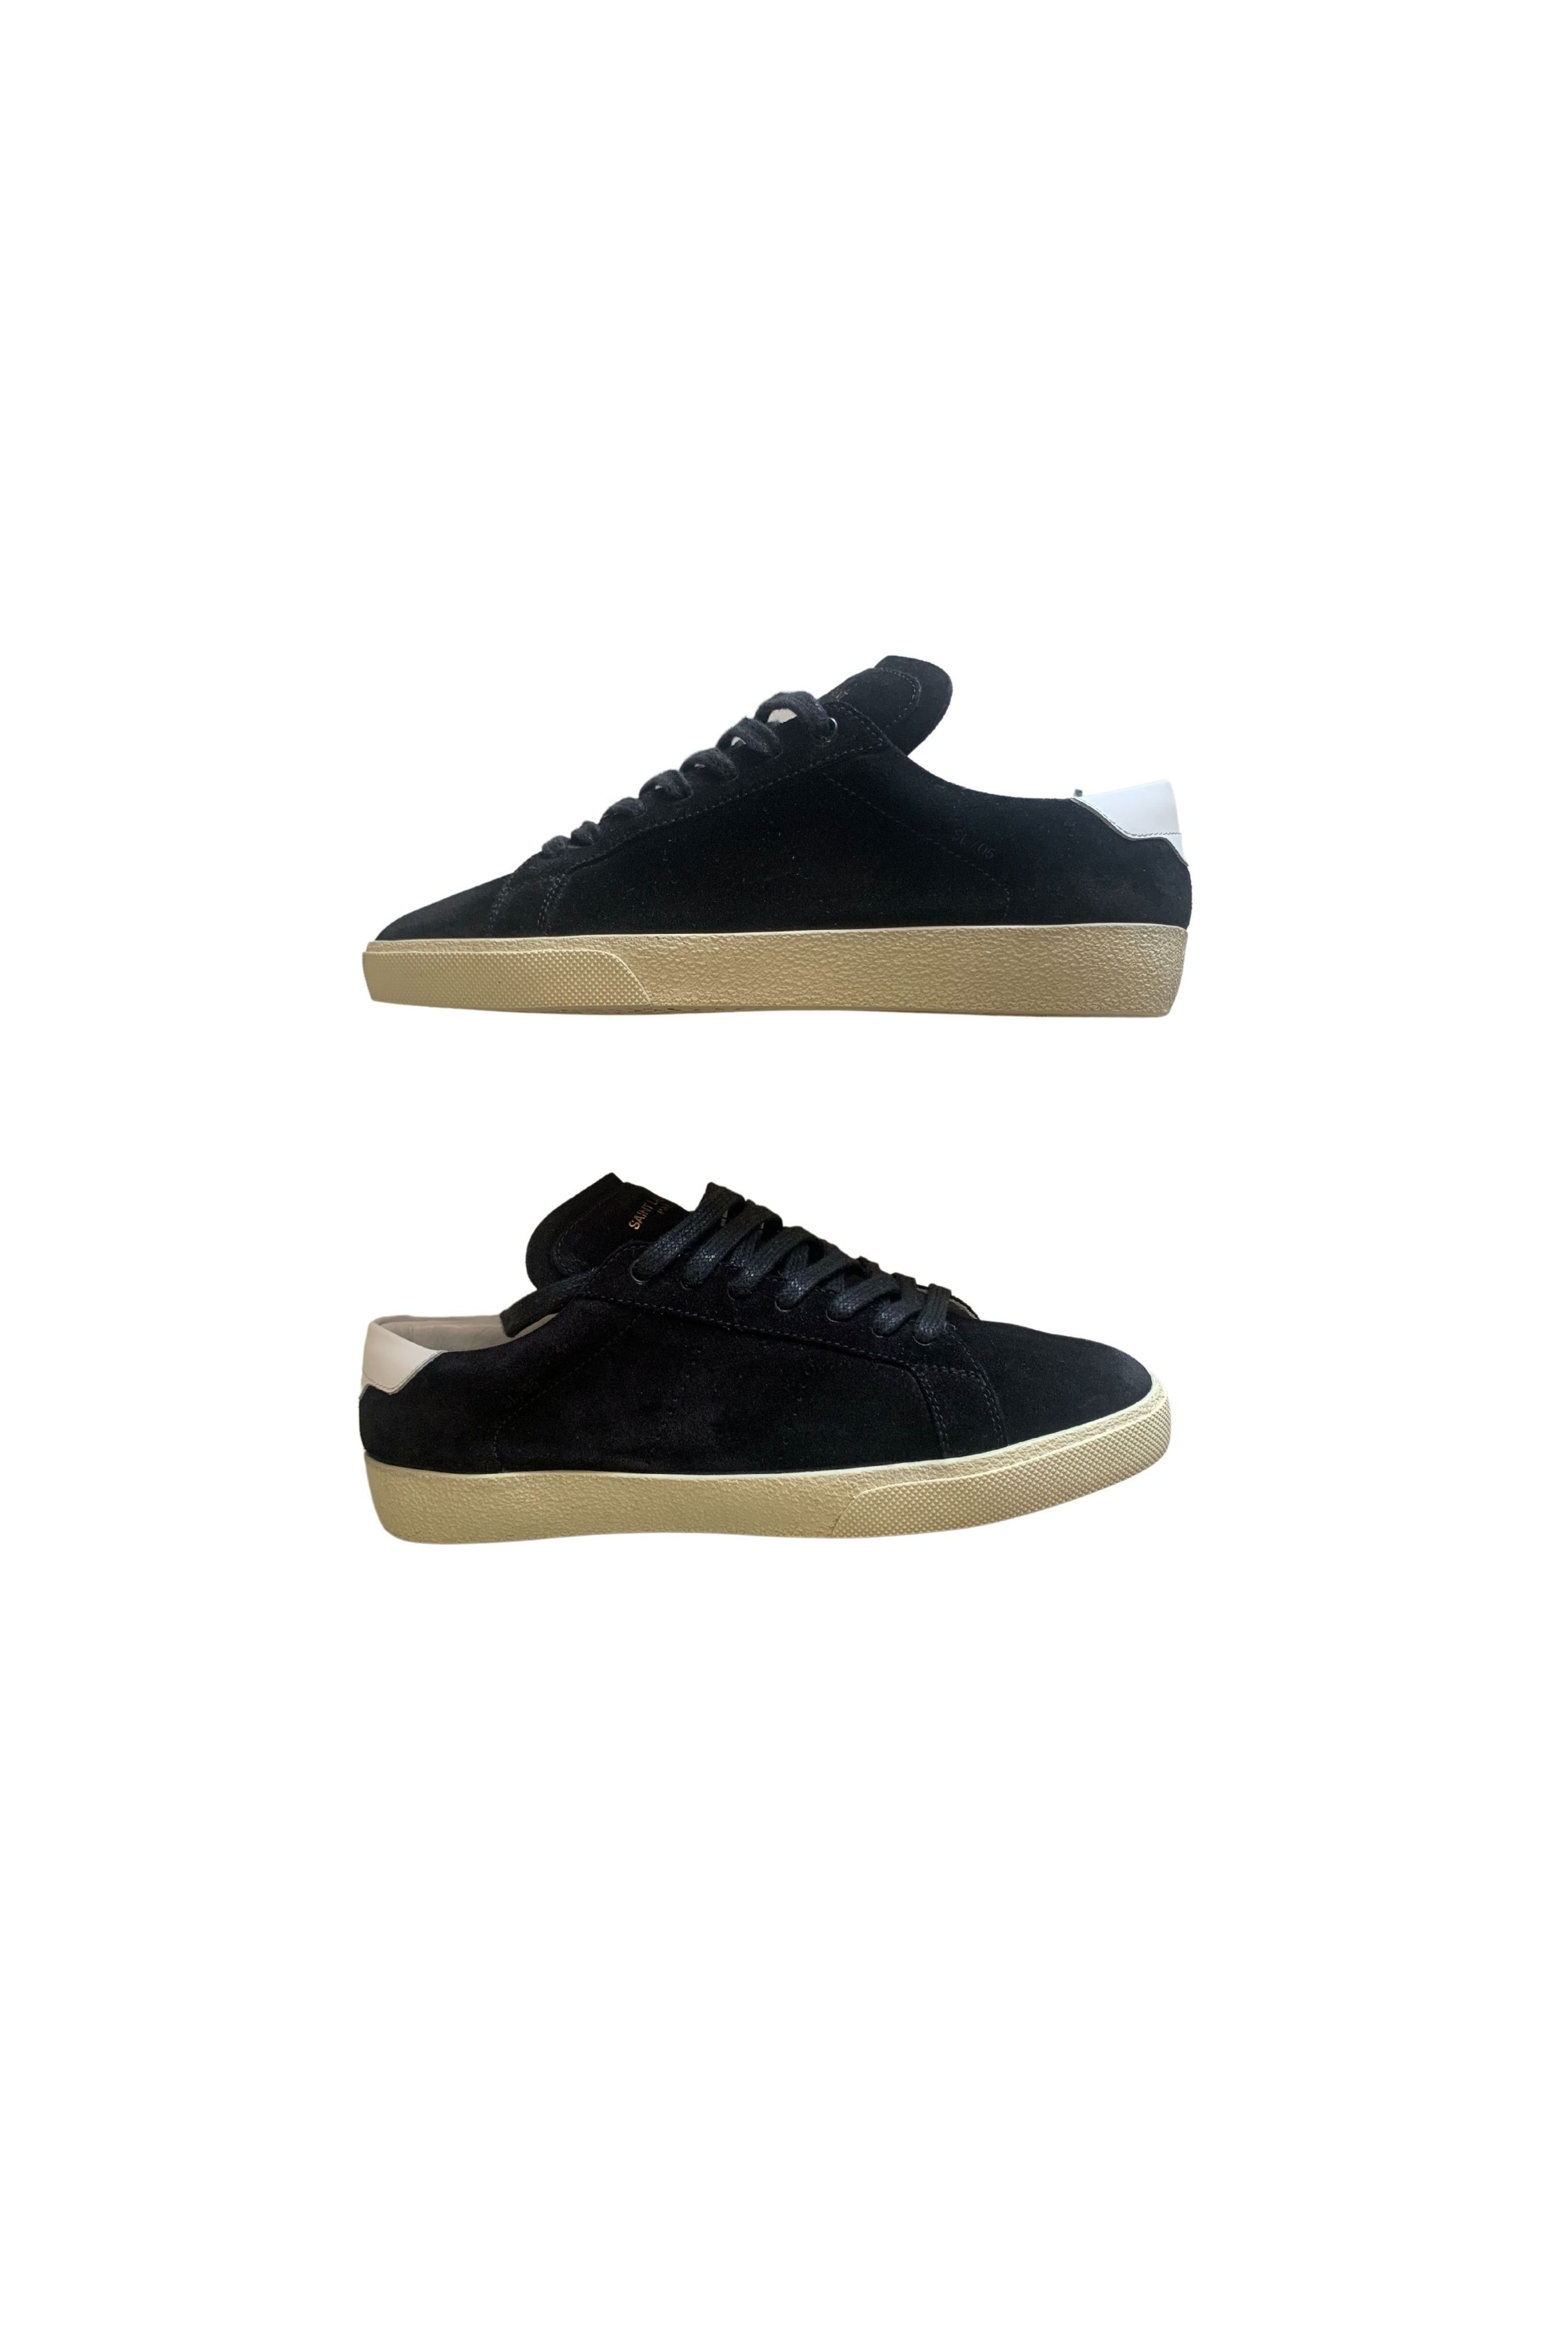 Saint Laurent SL06 Black Suede Low Sneakers